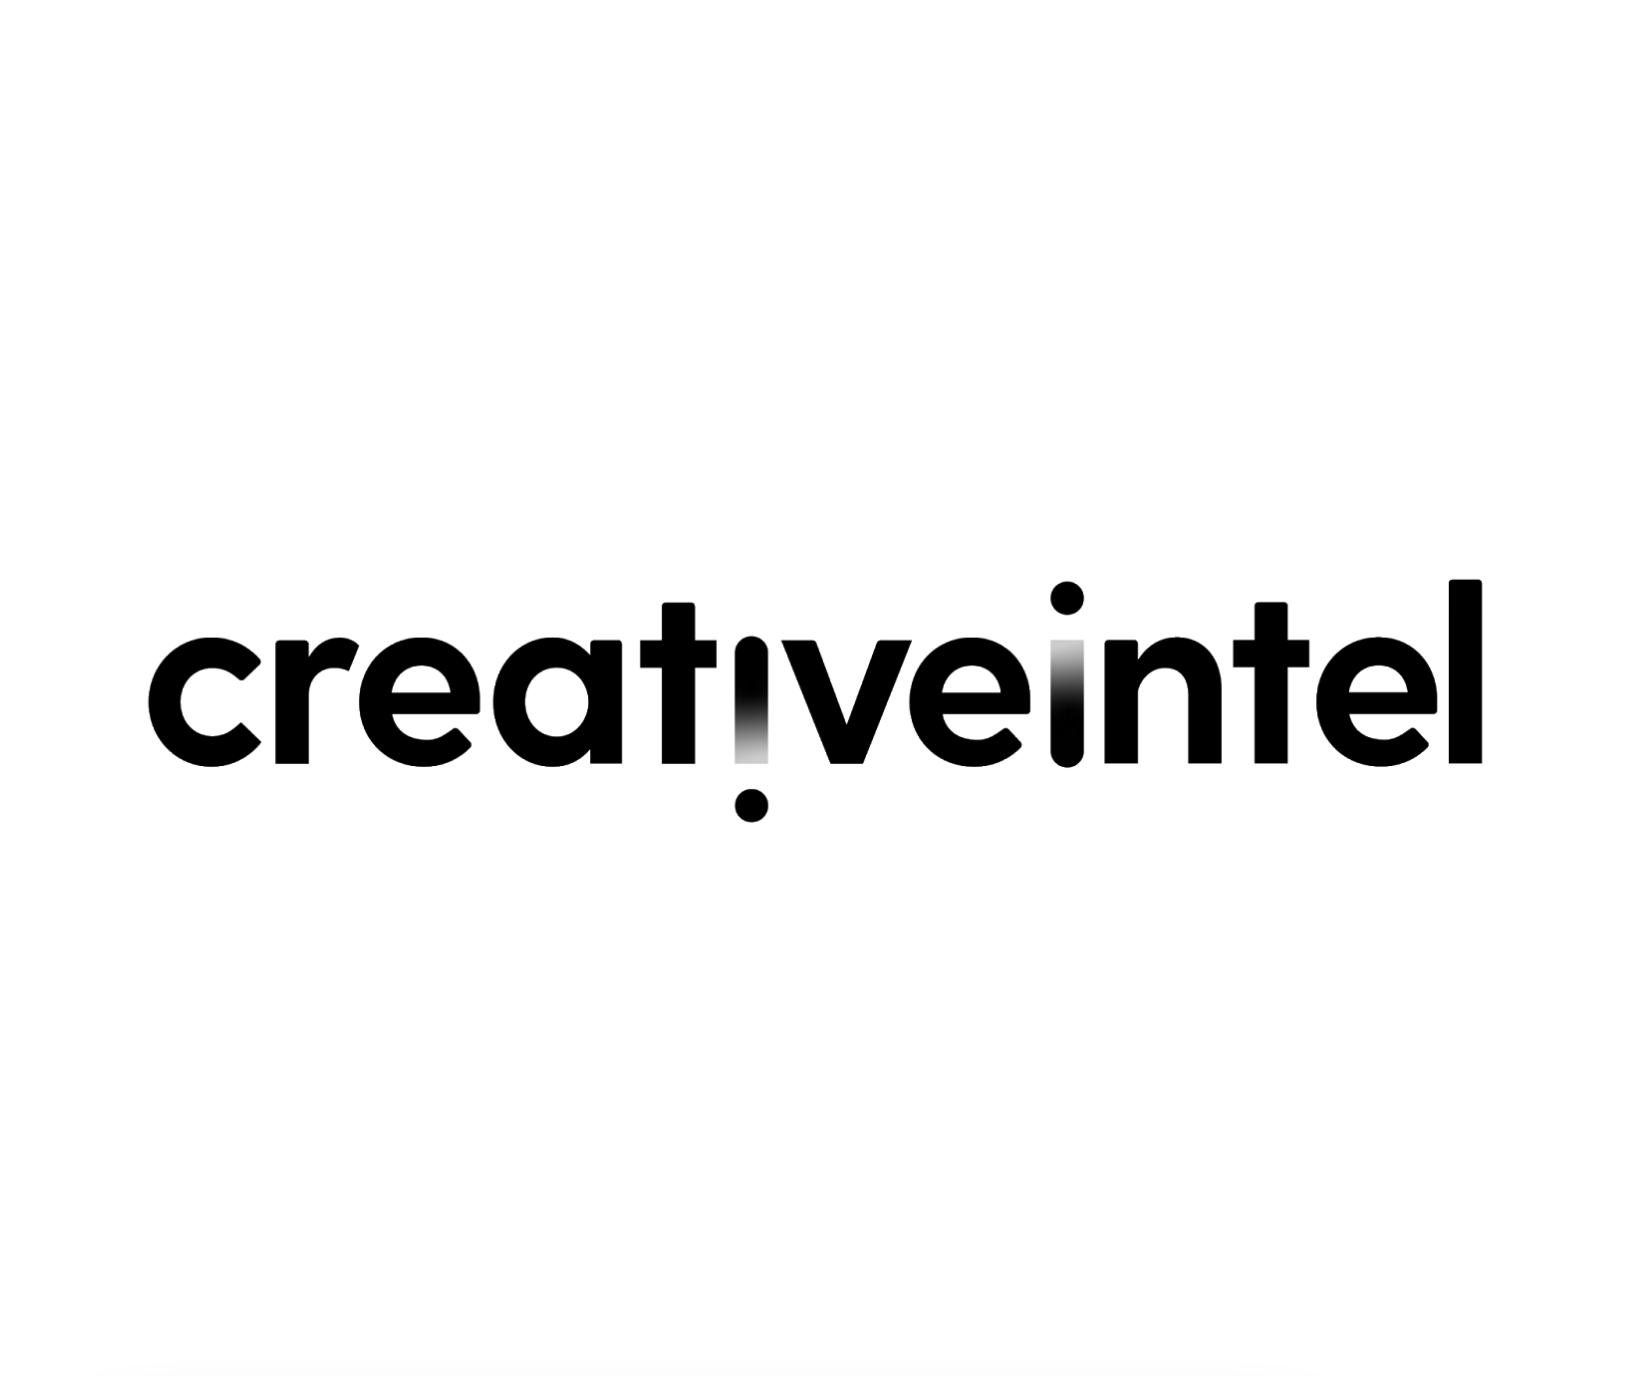 CreativeIntel